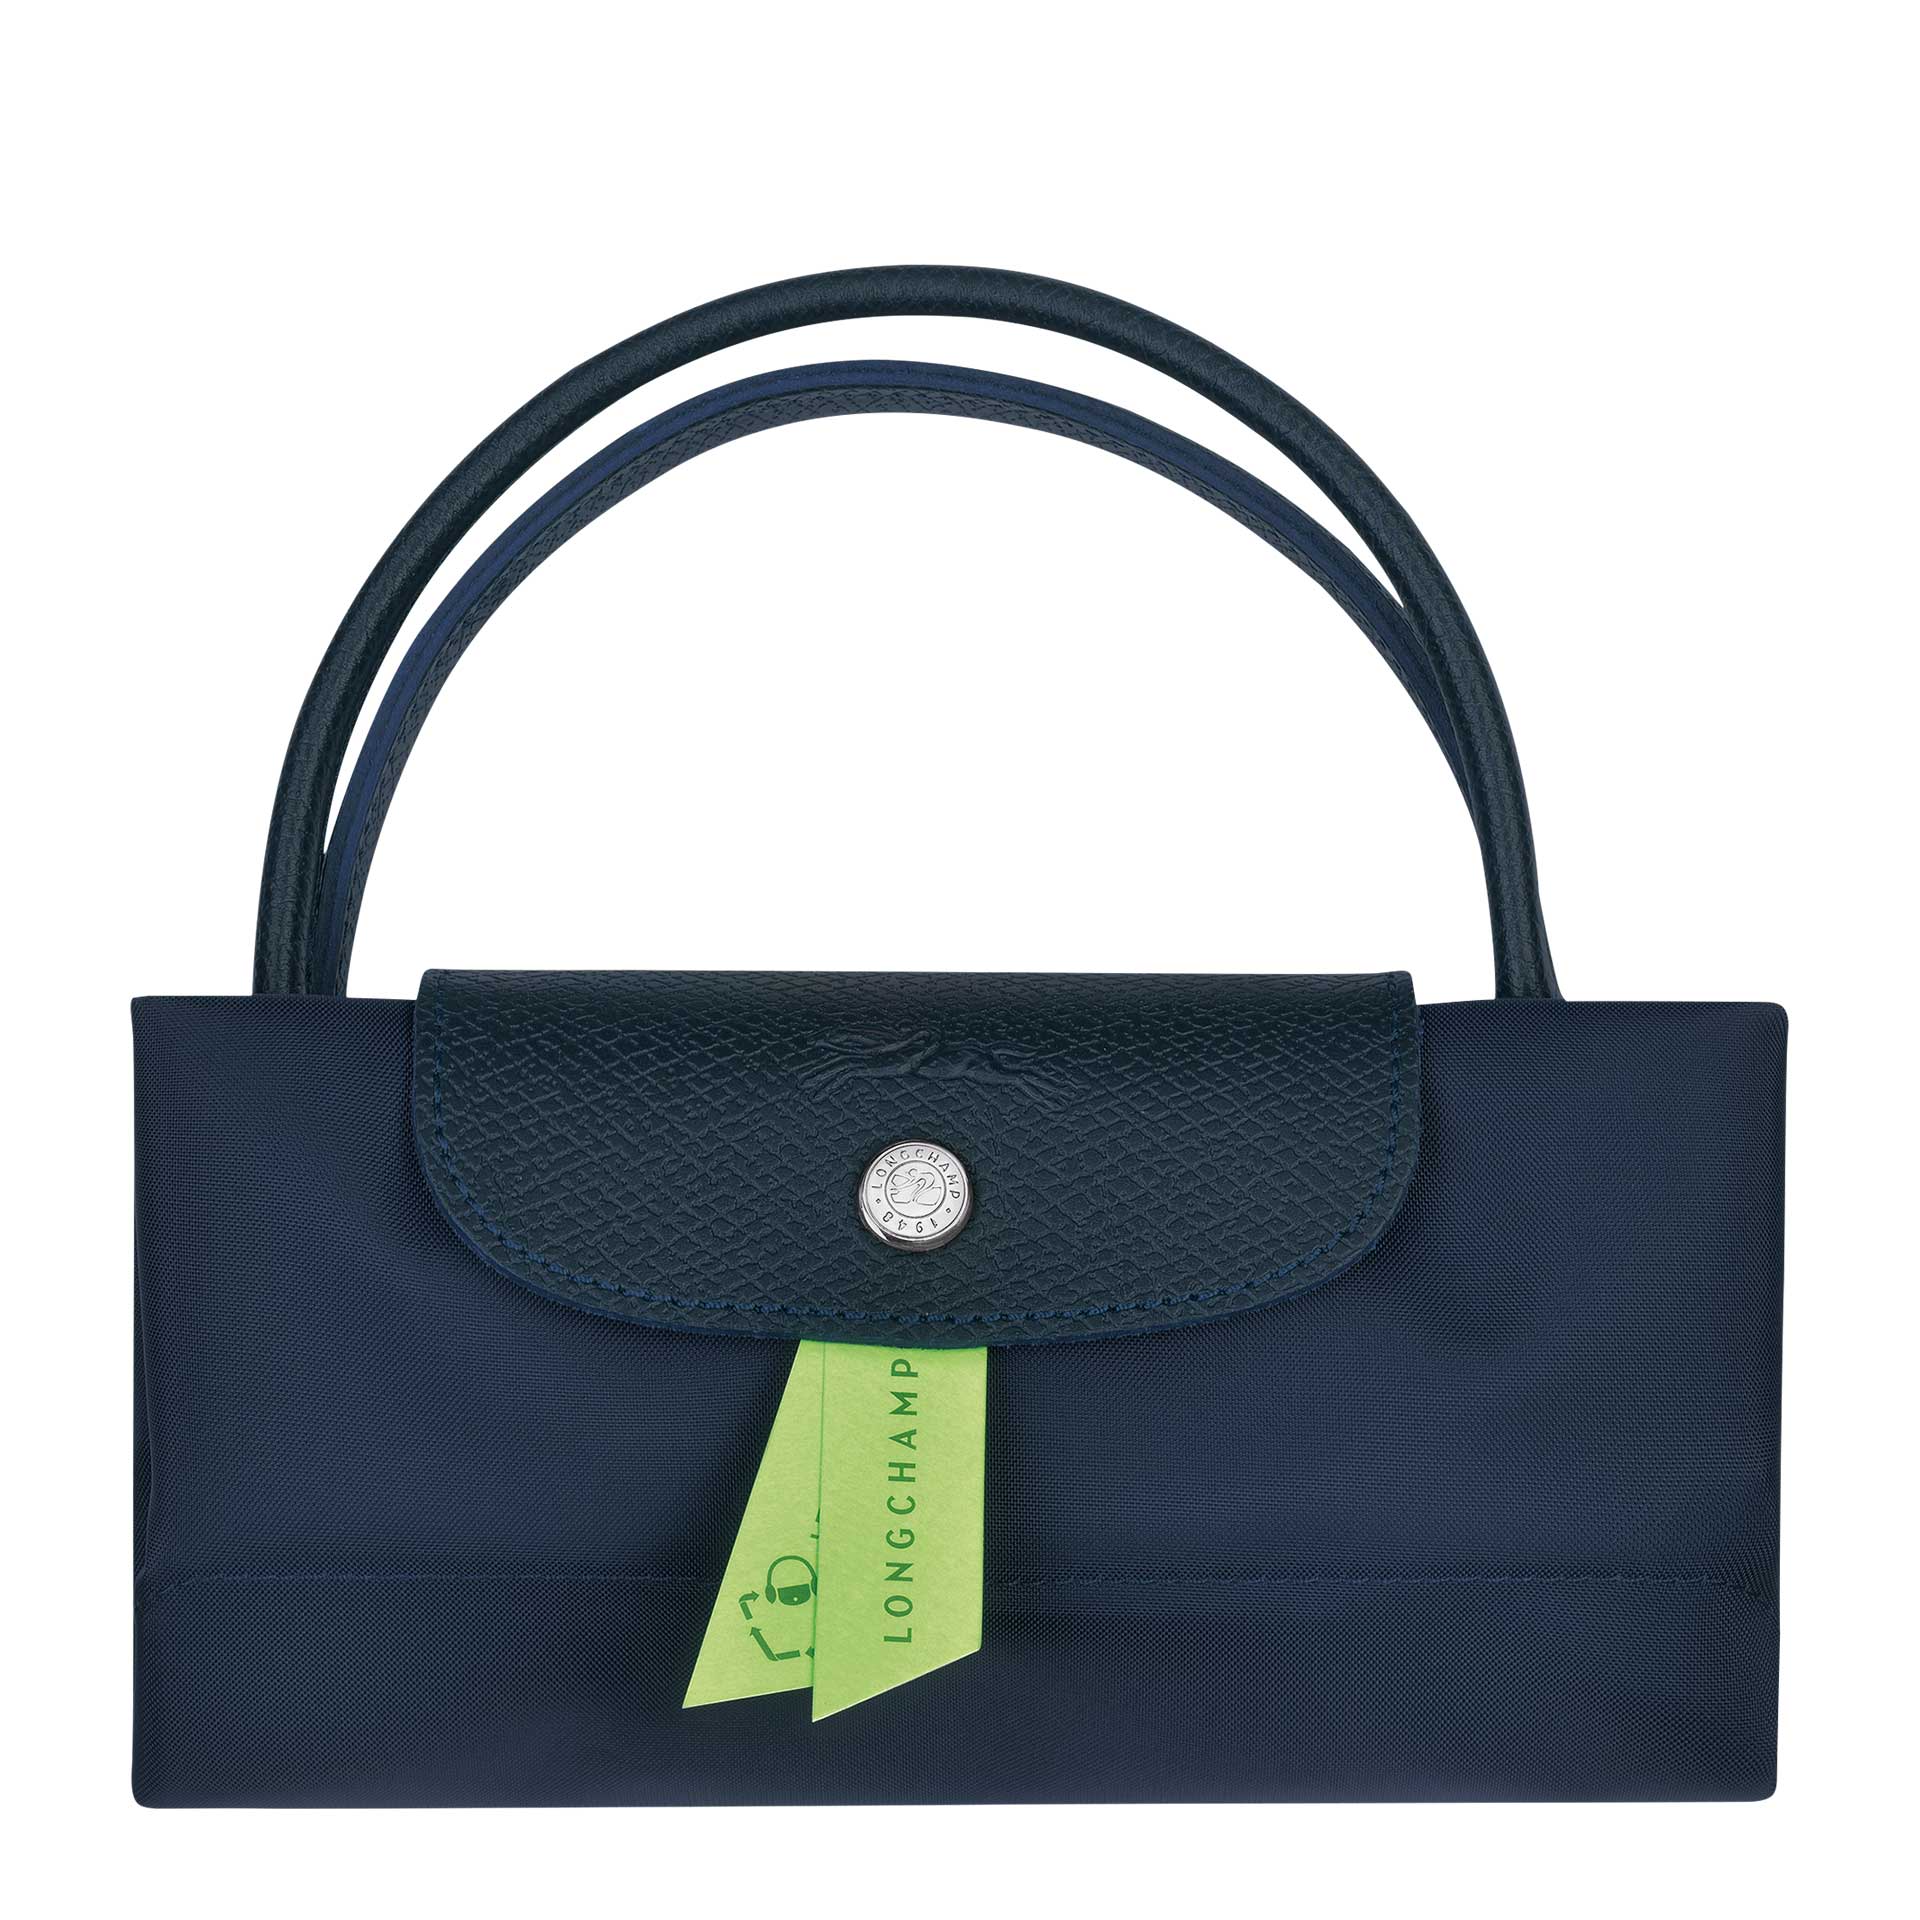 Longchamp Le Pliage Green Handtasche aus Recycling Material navy